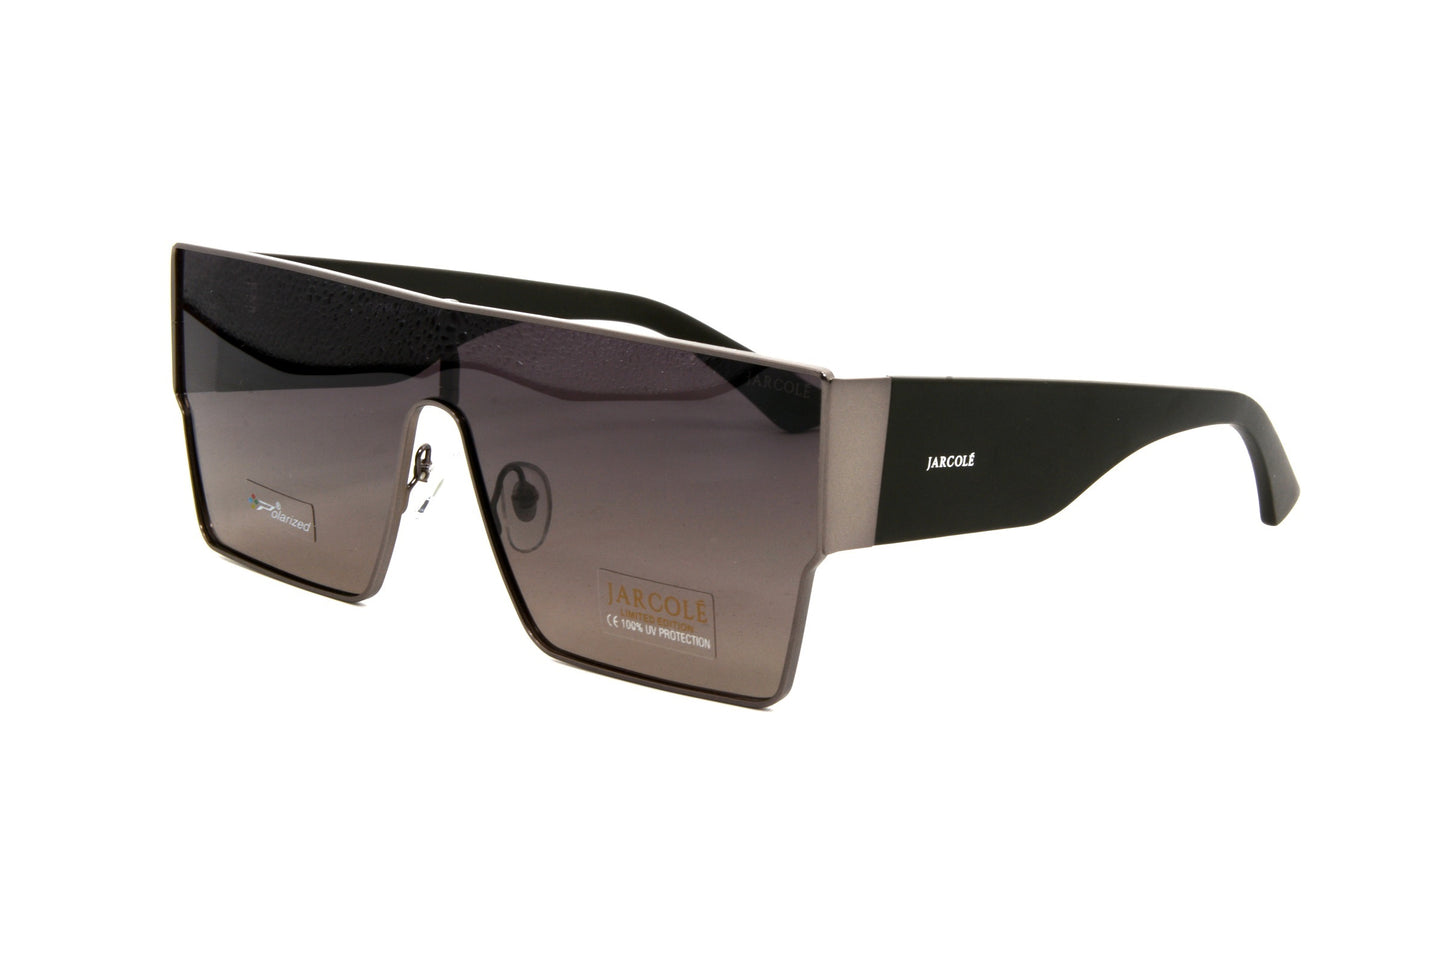 Jarcole sunglasses JR8266 17-G15